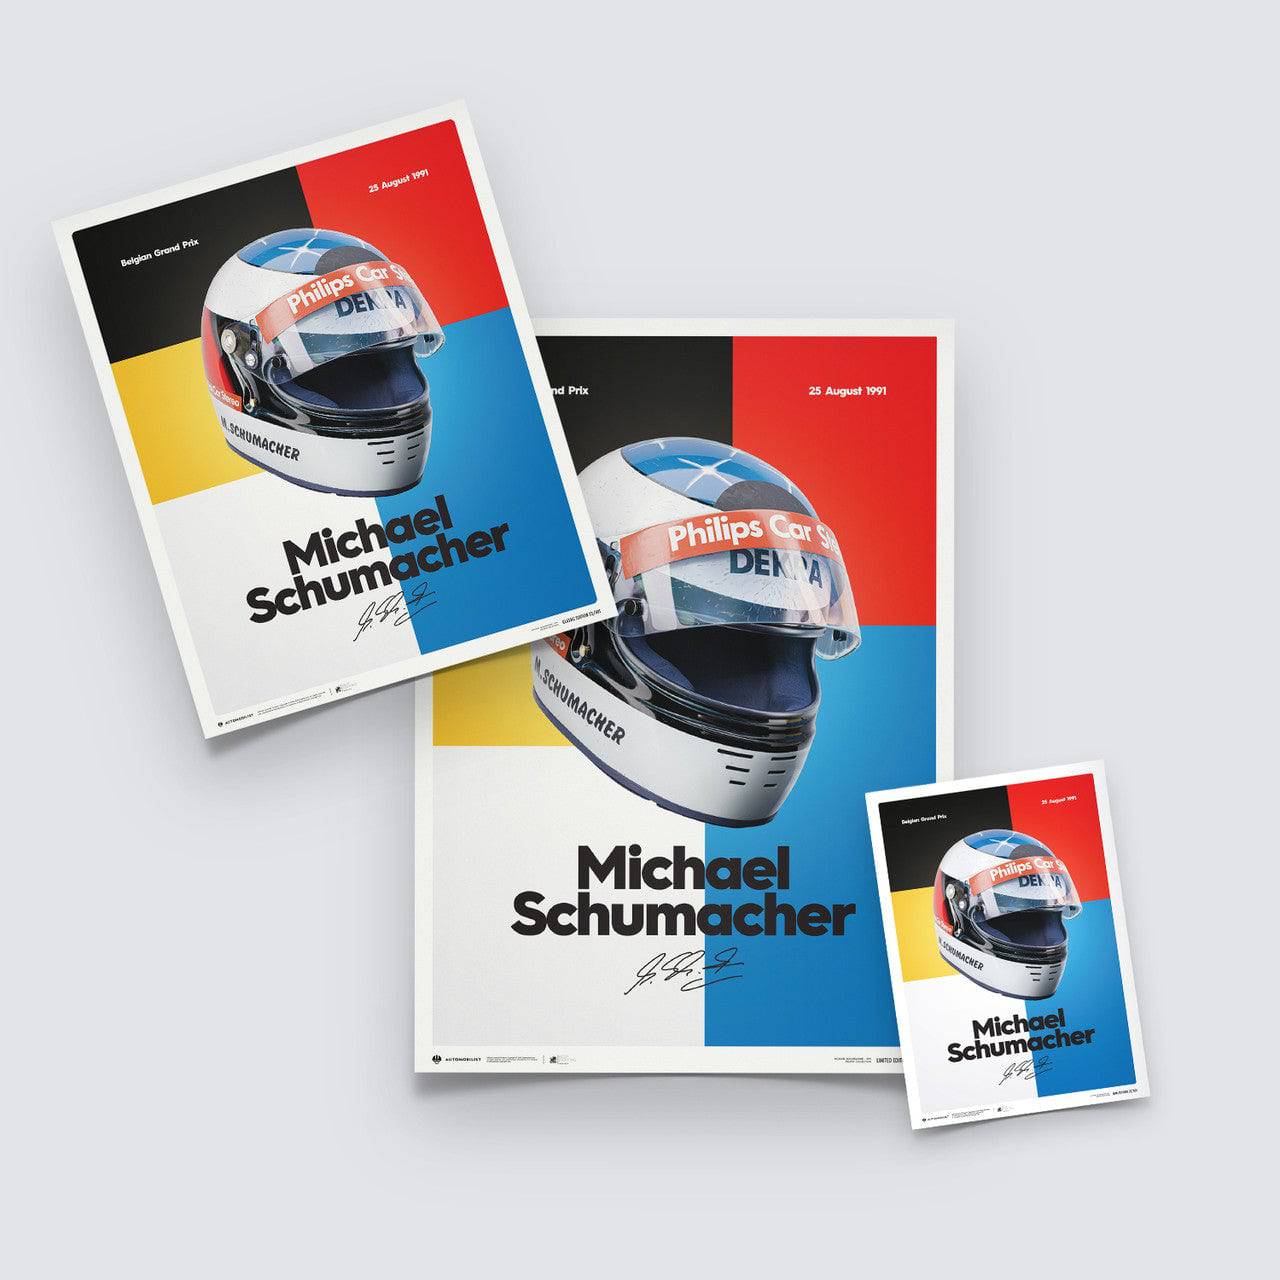 Michael Schumacher - Helmet - 1991 | Mini edition - Micheal Schumacher - Fueler store